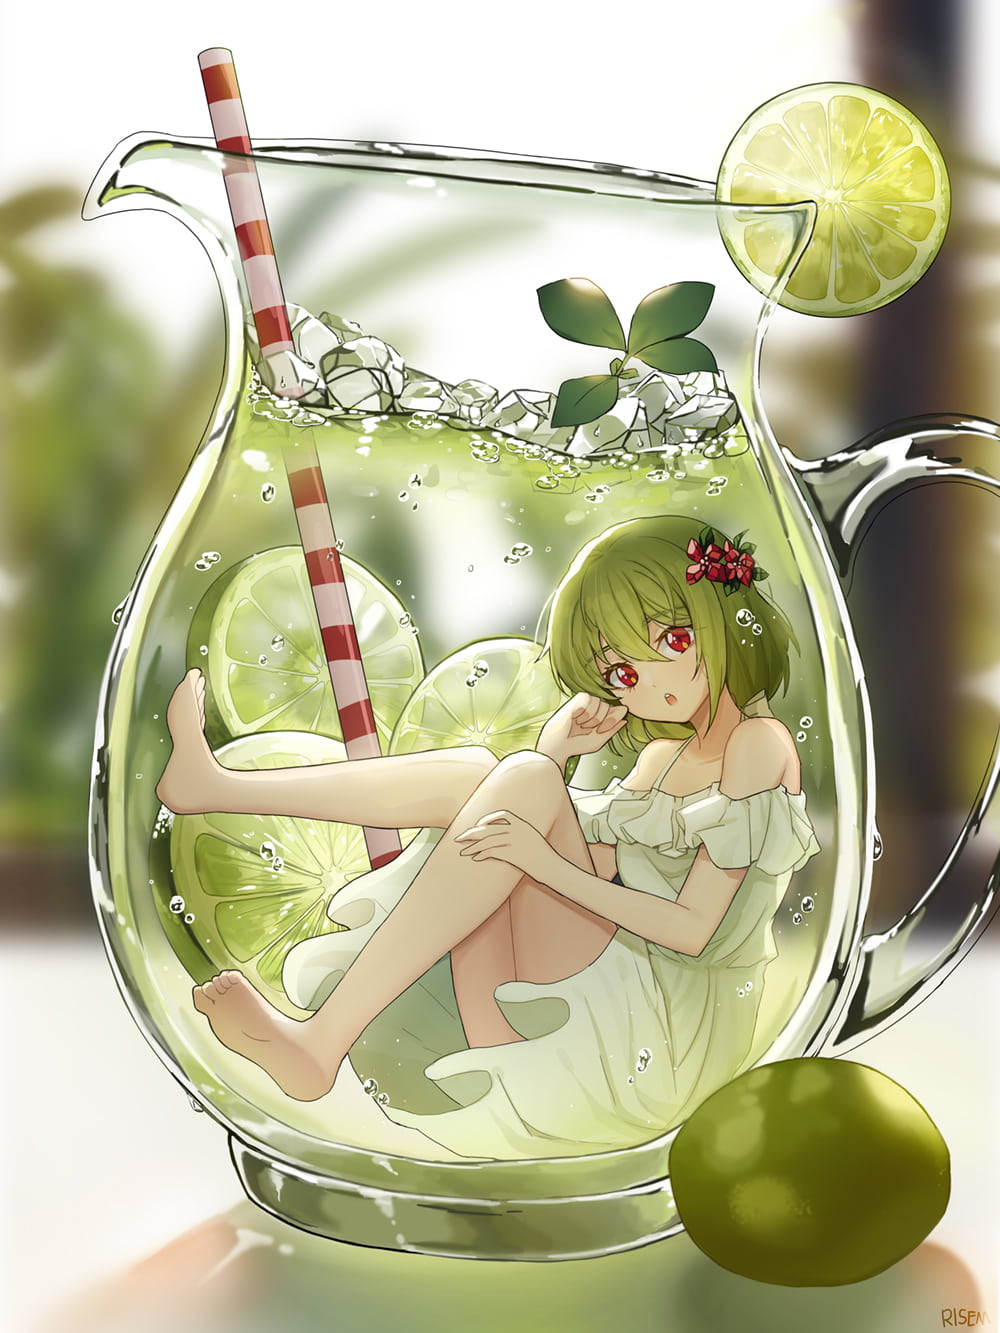 Lemon Girl [Original] : r/awwnime